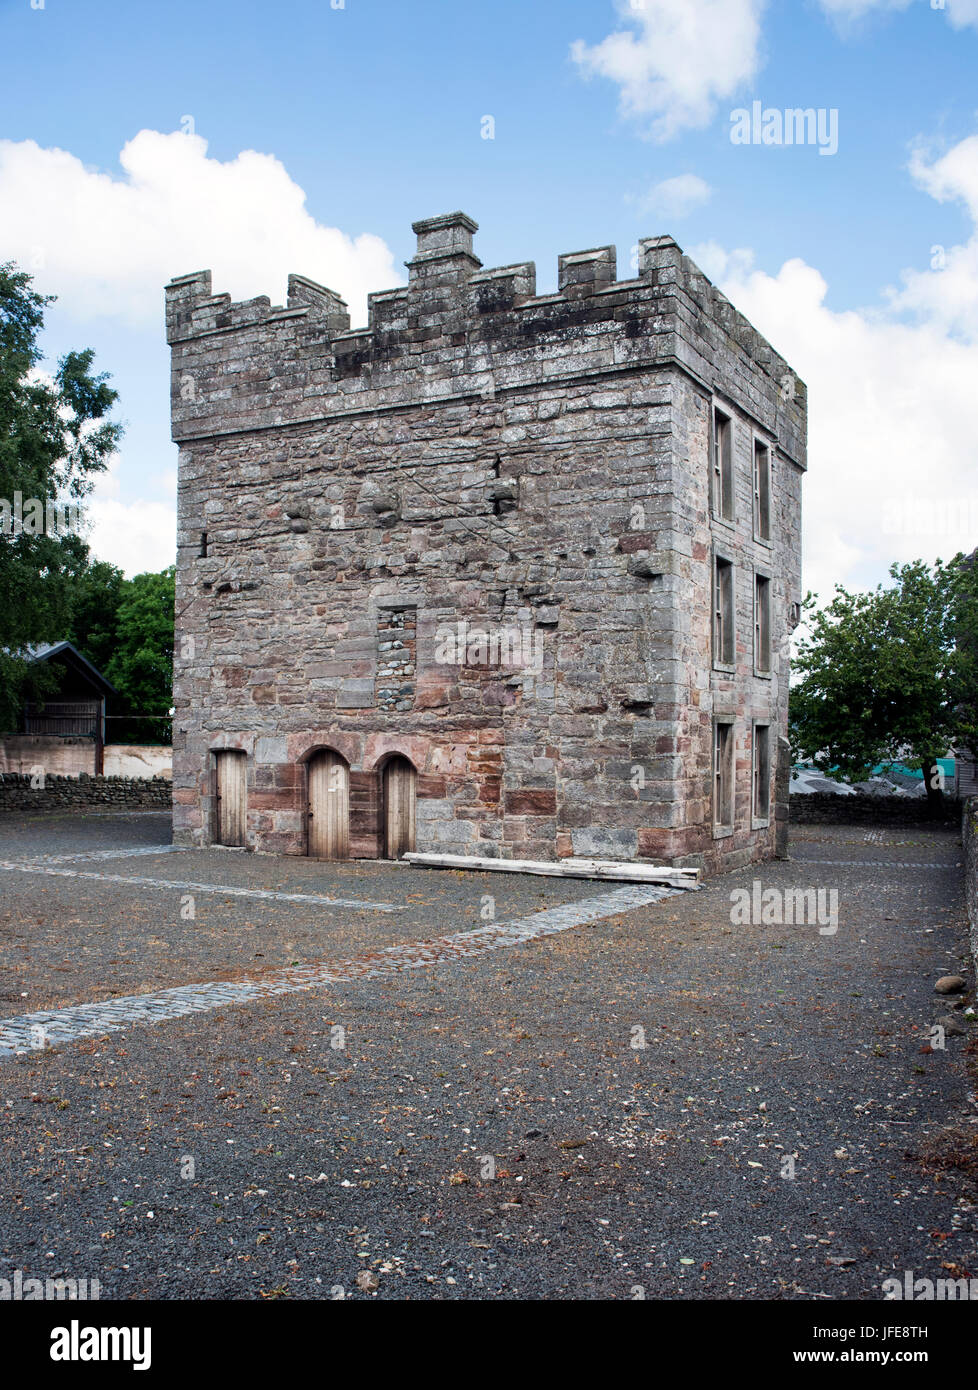 The pele tower at Clifton, Cumbria, UK Stock Photo